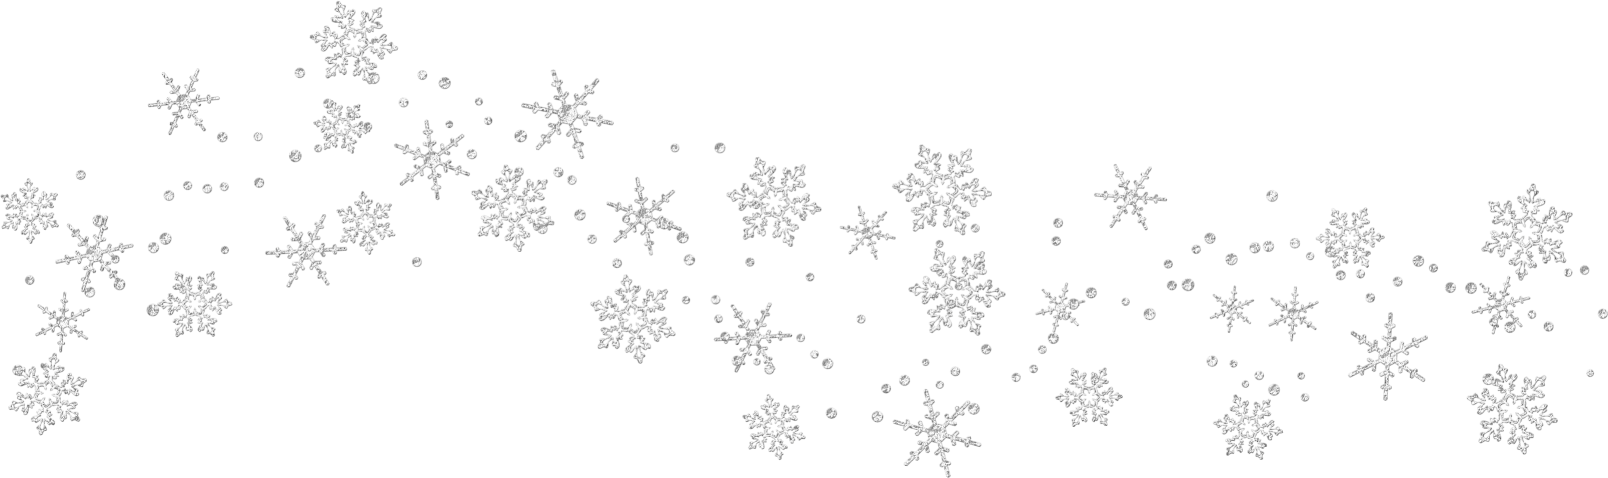 Free Transparent Snowflake Border, Download Free Clip Art.